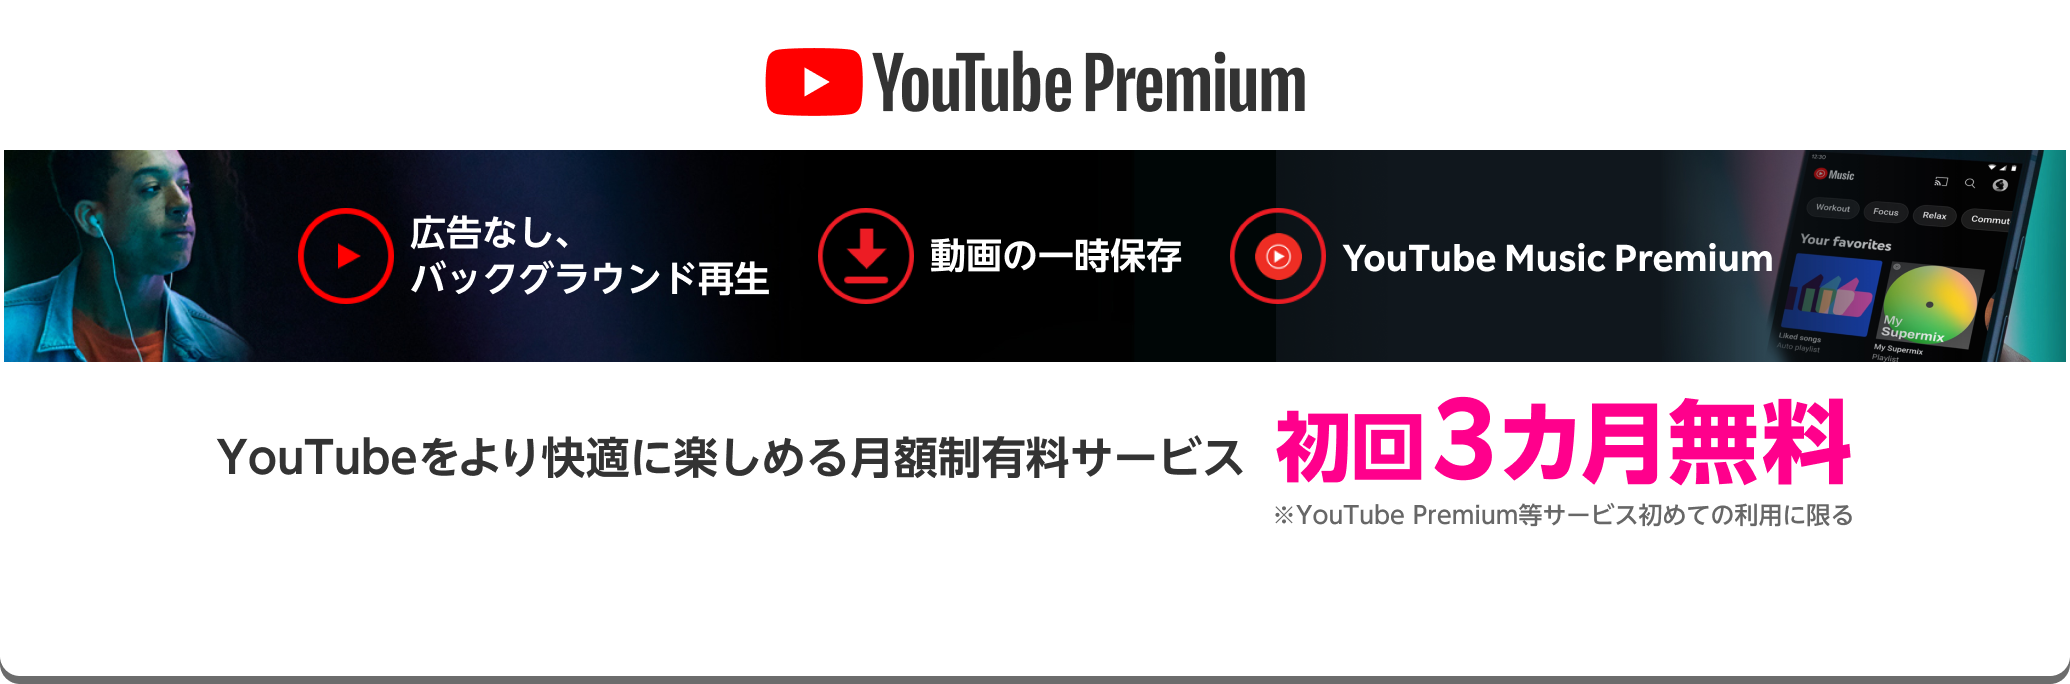 YouTube Premium YouTubeをより快適に楽しめる月額制有料サービス 1,180円(税込)／月▶初回3カ月無料 ※Androidのお客様のみ ※YouTube Premium等サービス初めての利用に限る